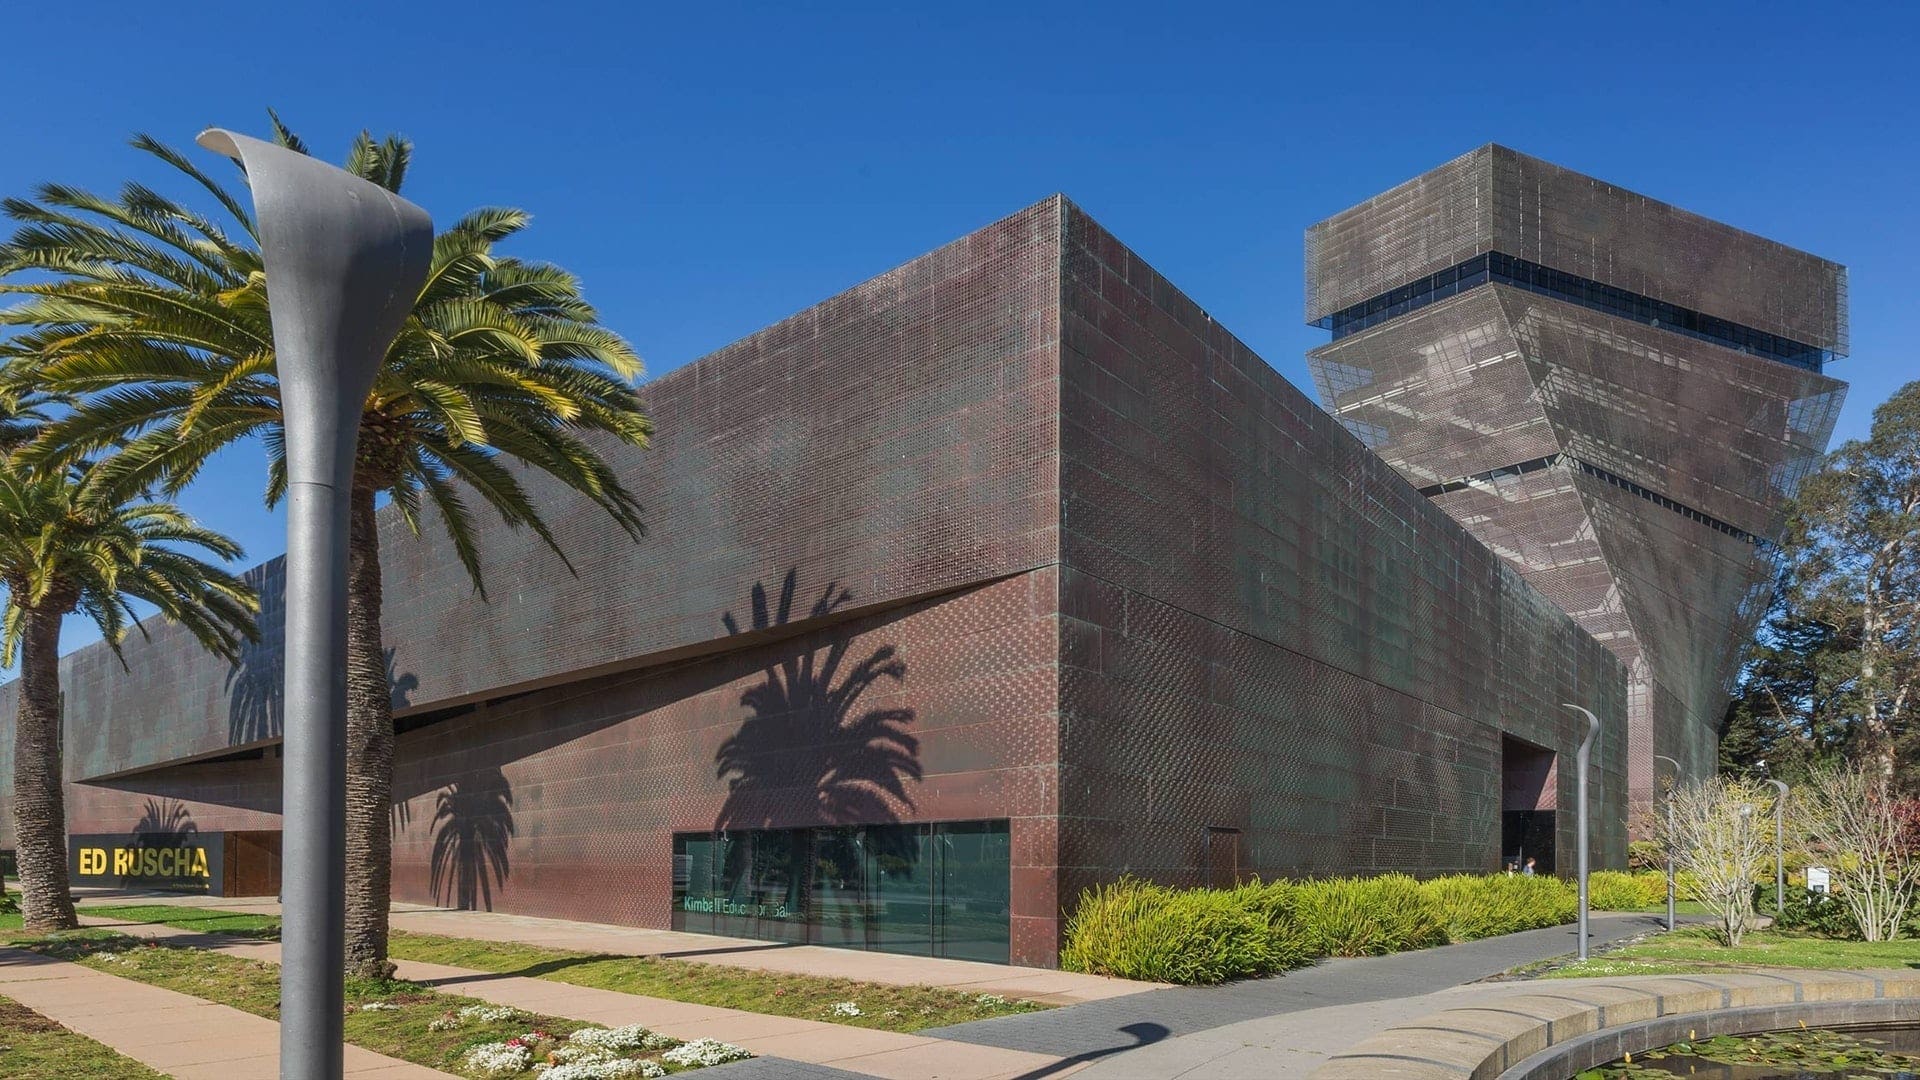 THE COPPER CLAD DE YOUNG MUSEUM IN SAN FRANCISCO, CALIFORNIA